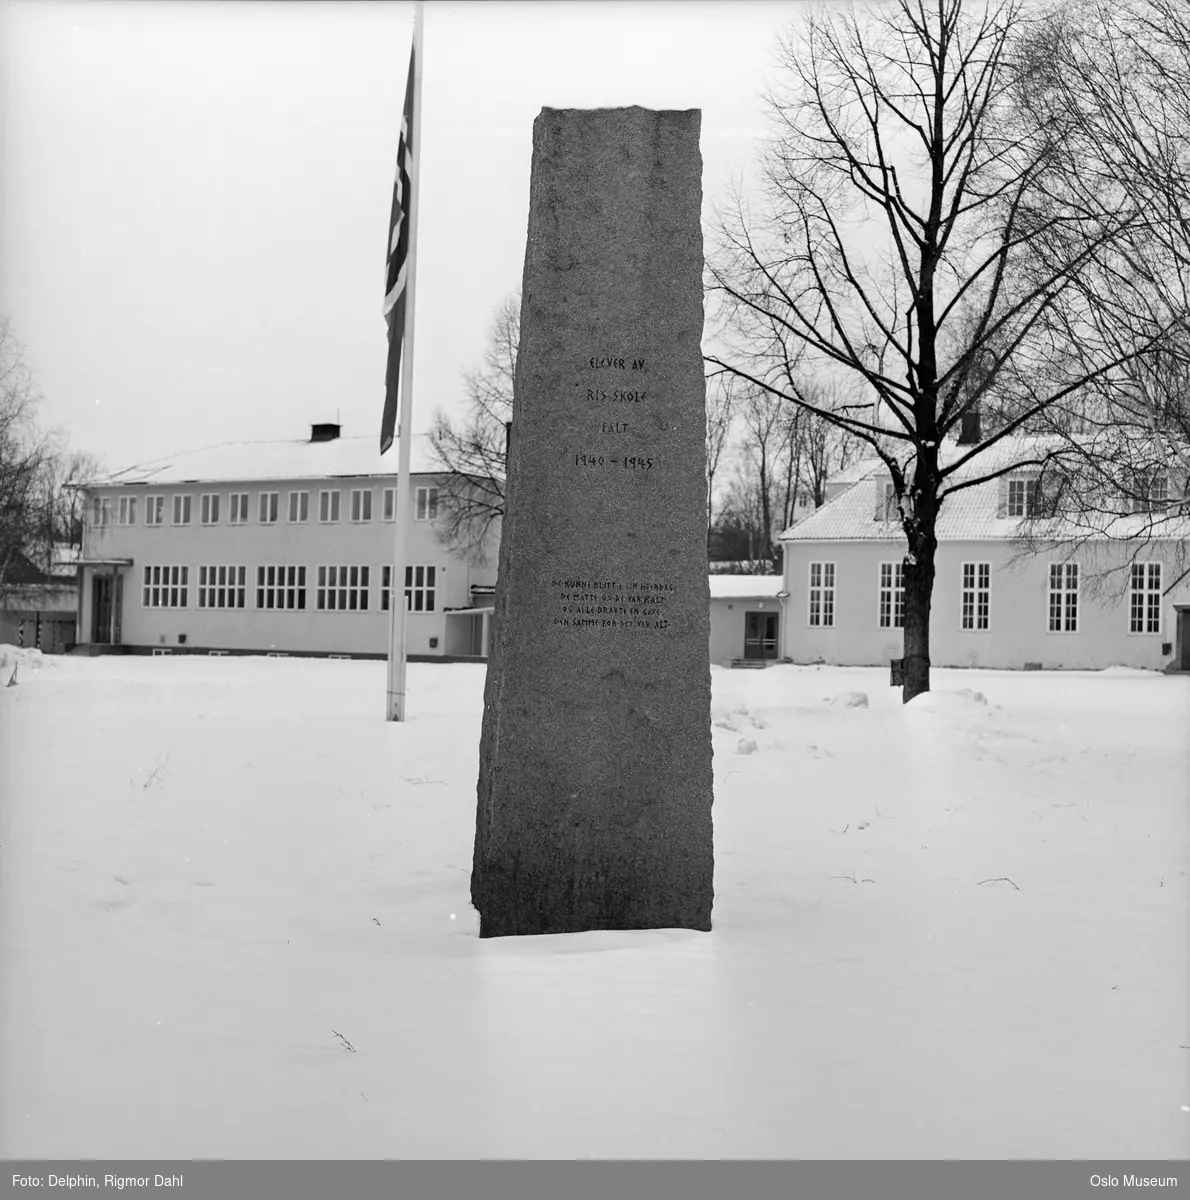 Ris skole, skolegård, minnestøtte over krigens ofre, snø